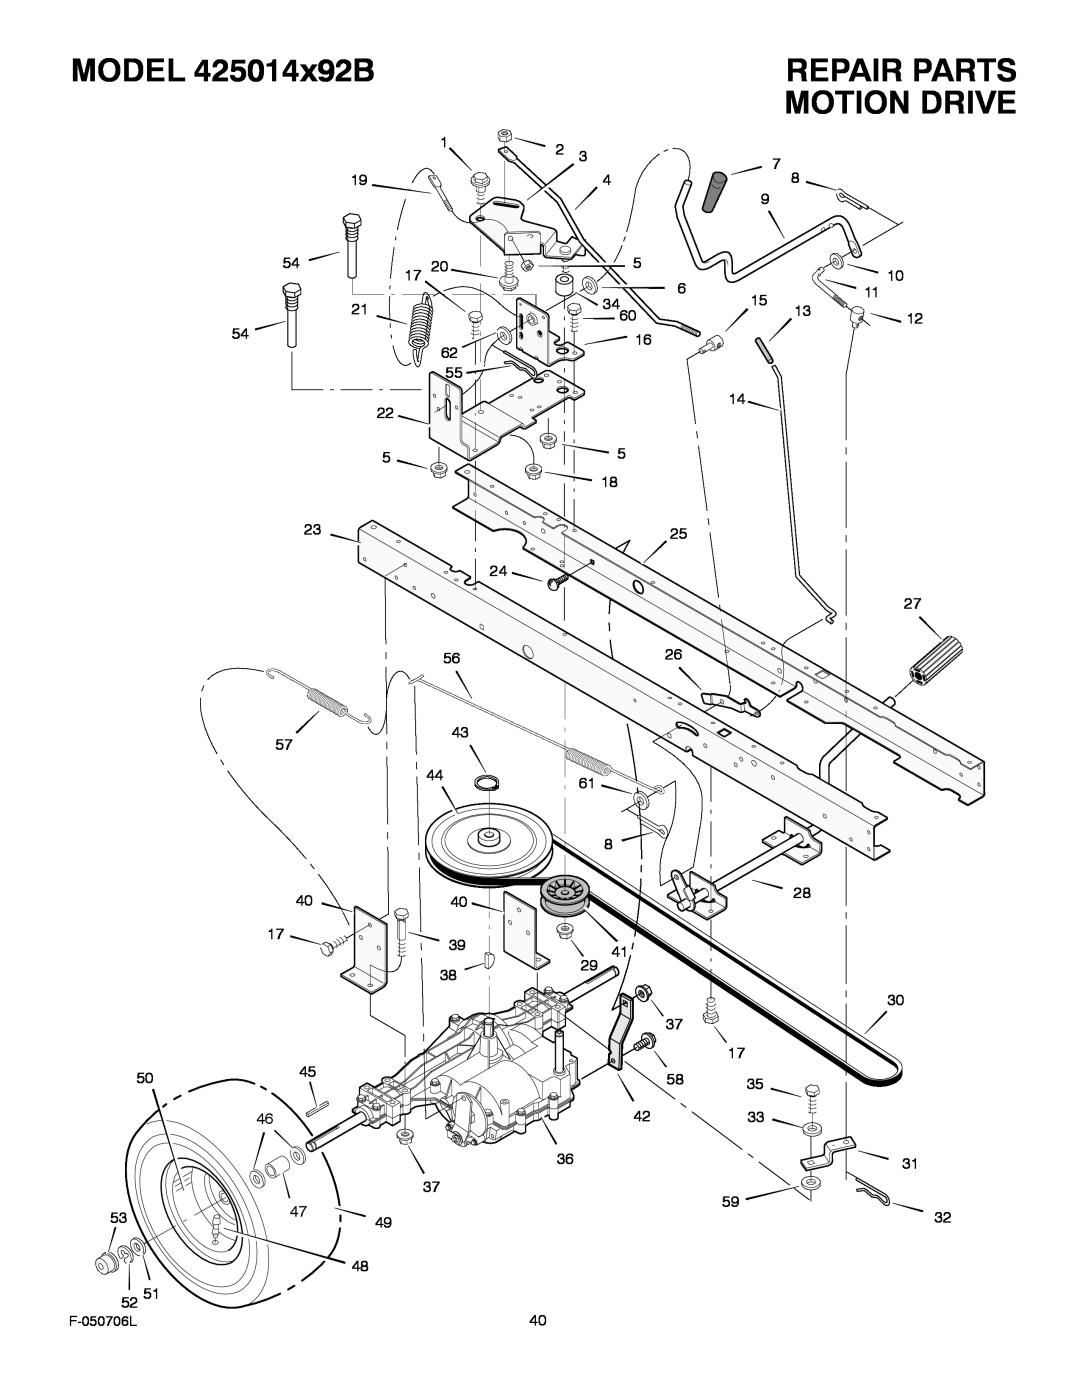 Murray manual Motion Drive, MODEL 425014x92B, Repair Parts 